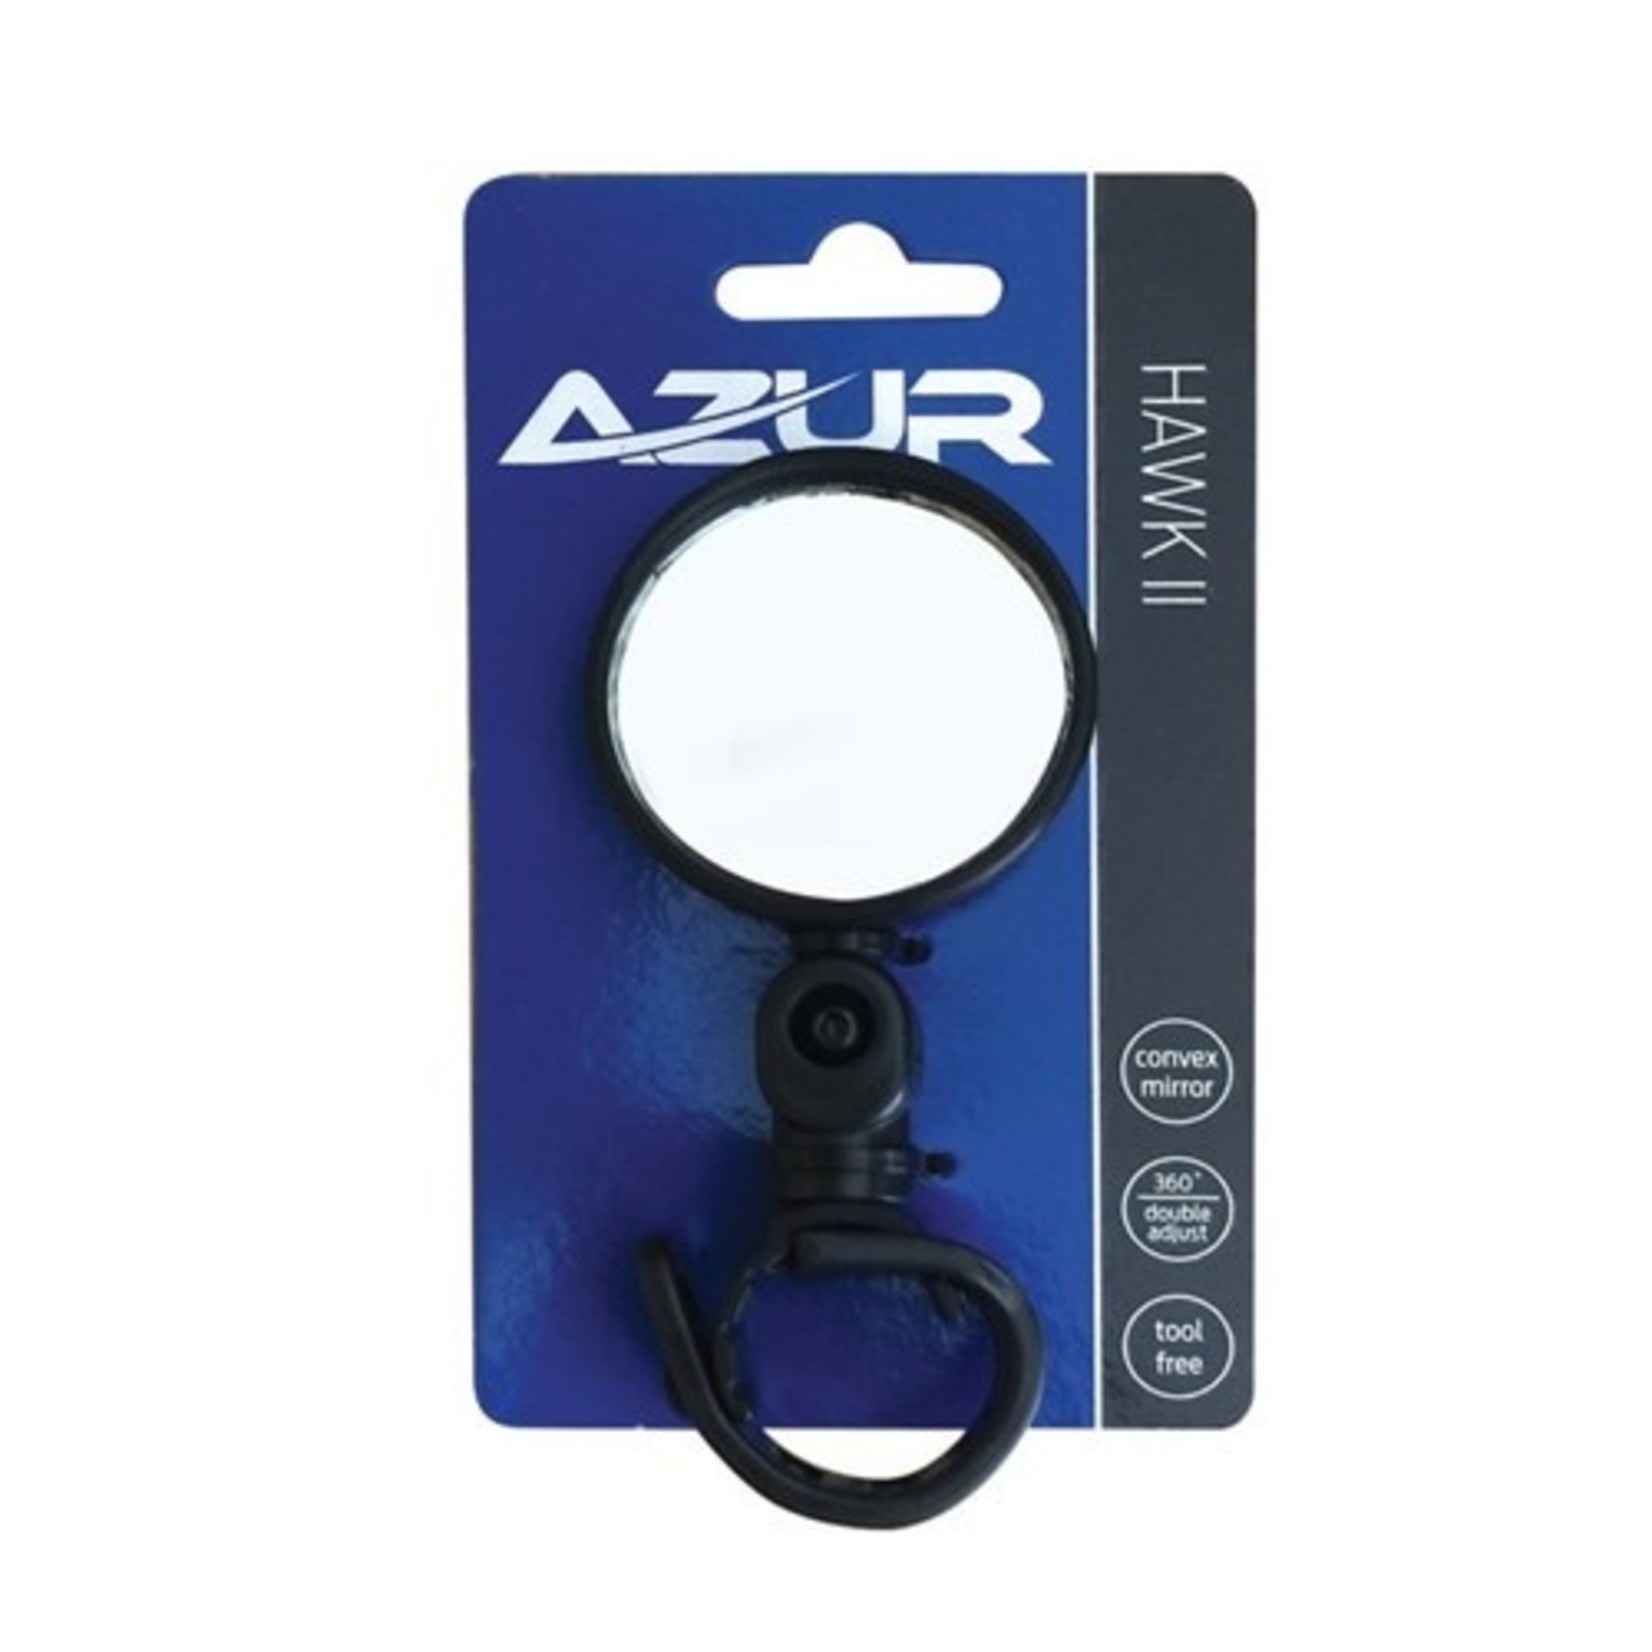 Azur Azur Hawk II Bike/Bicycle Convex Mirror - 46mm Diameter